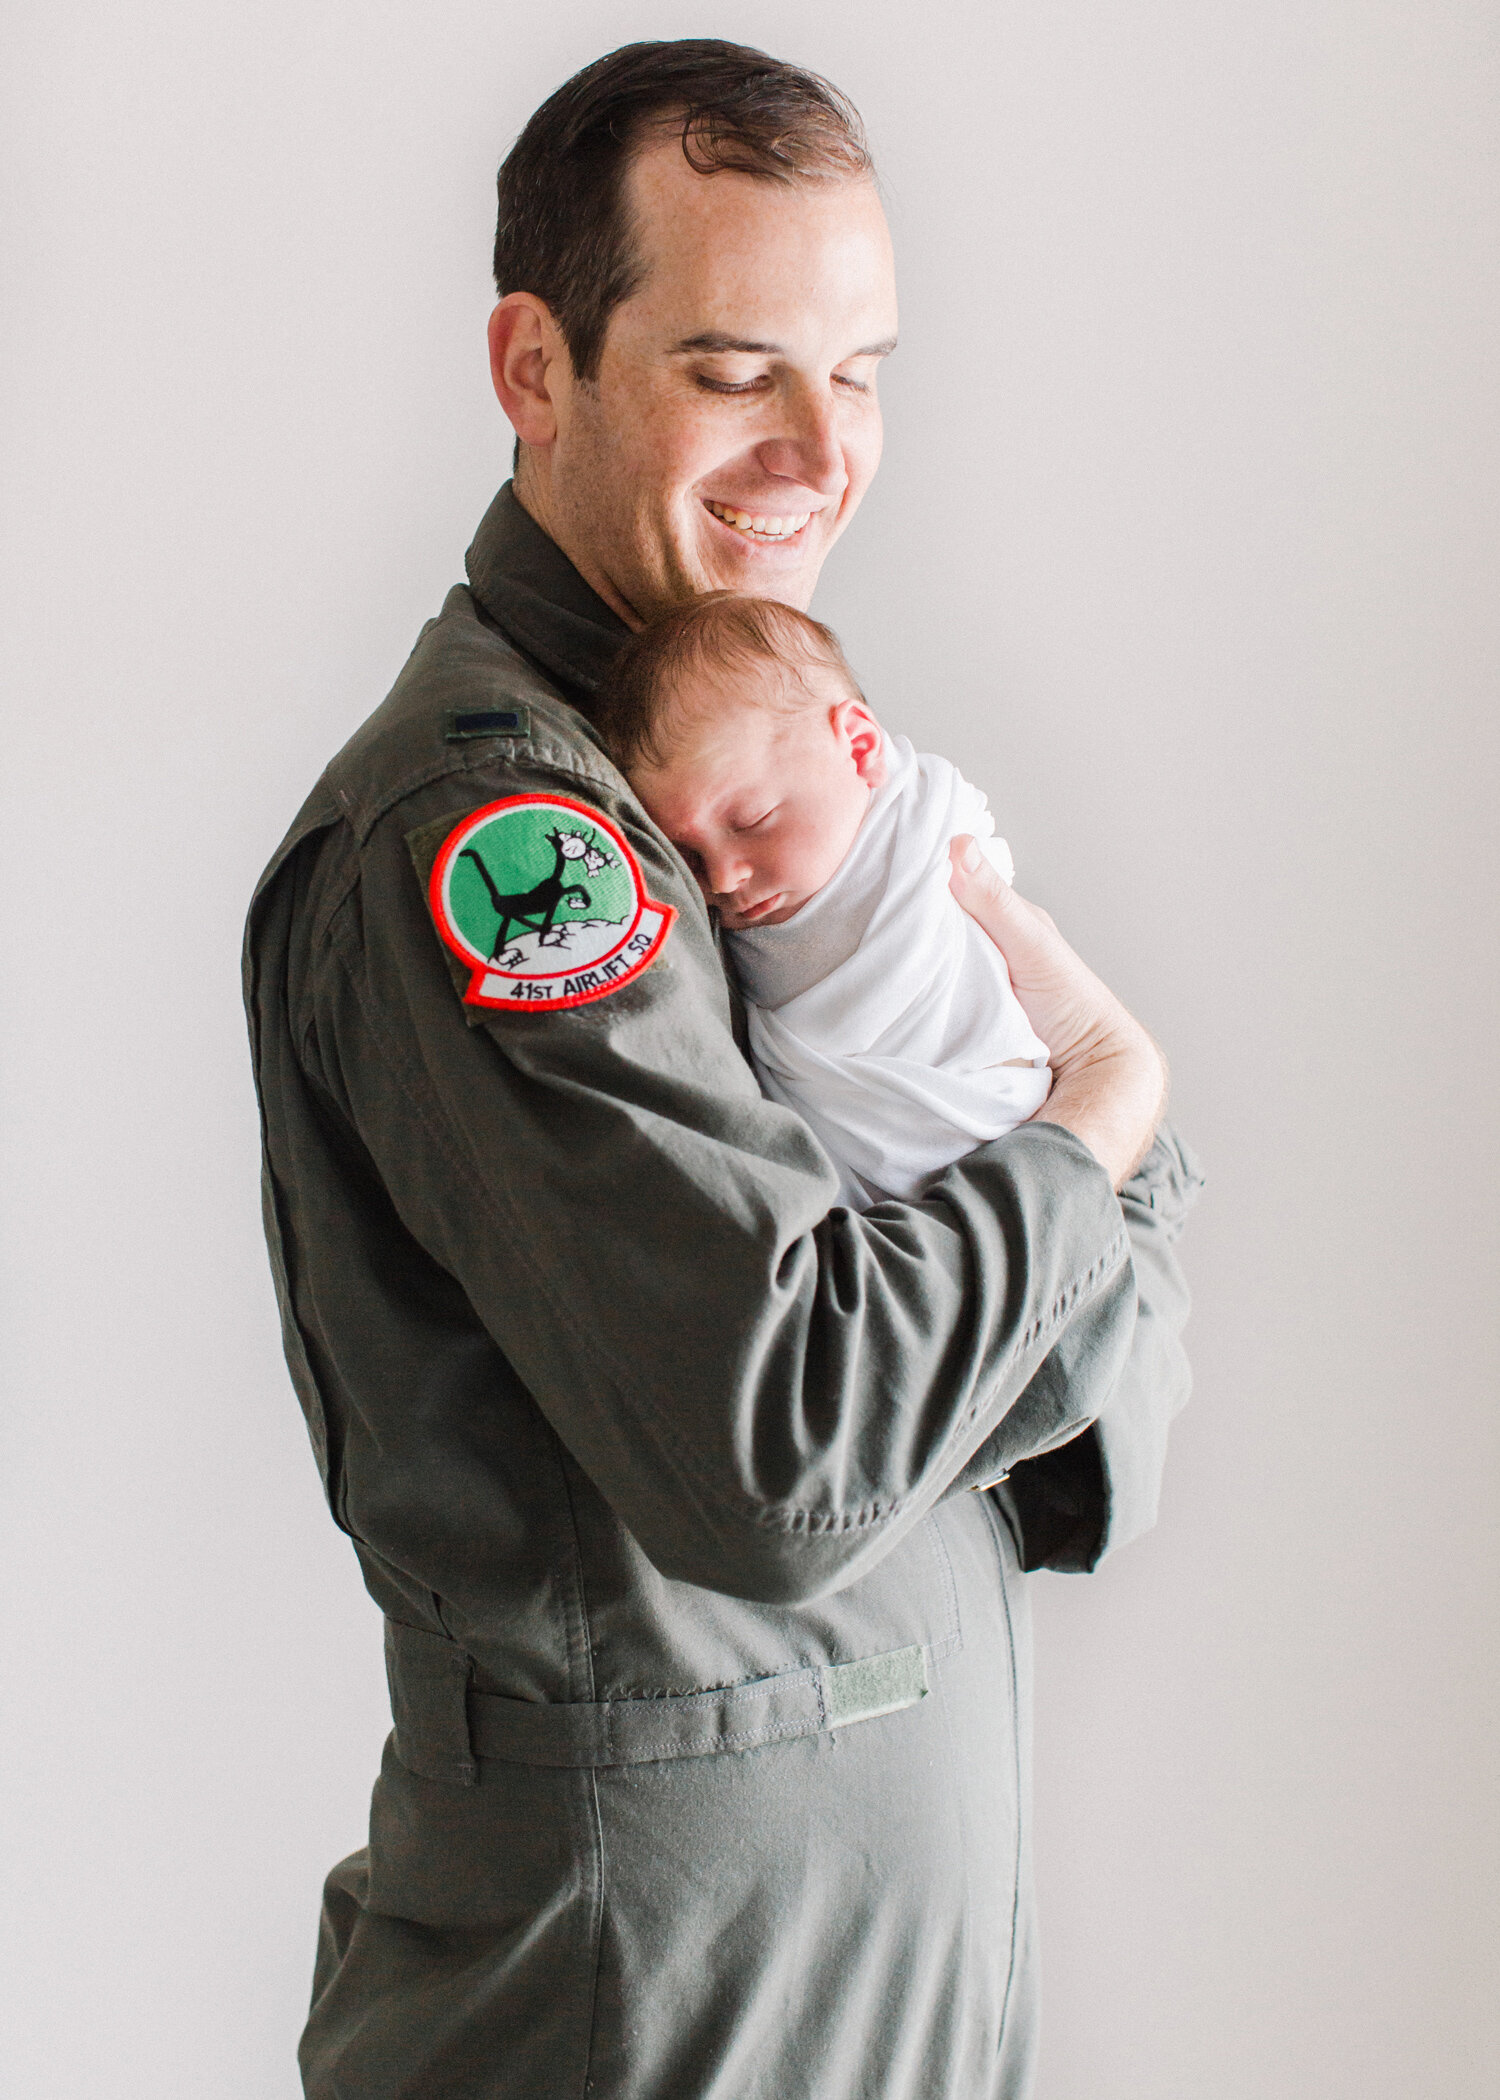 dad-with-newborn-in-military-uniform.jpg